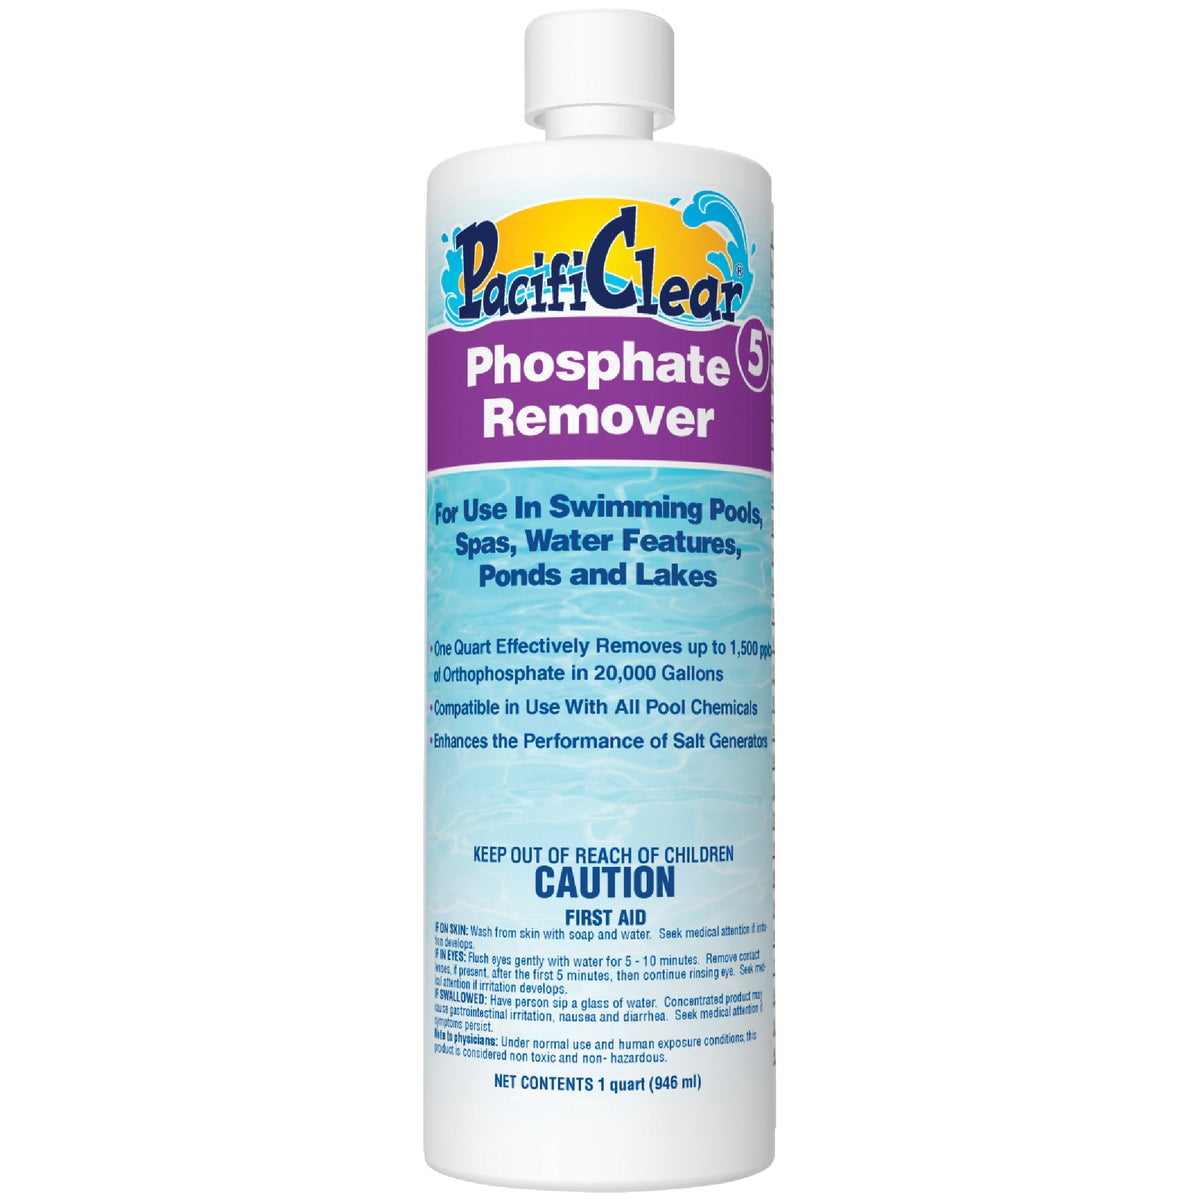 Item 800503, Phosphate remover provides efficient removal or lowering of phosphate 